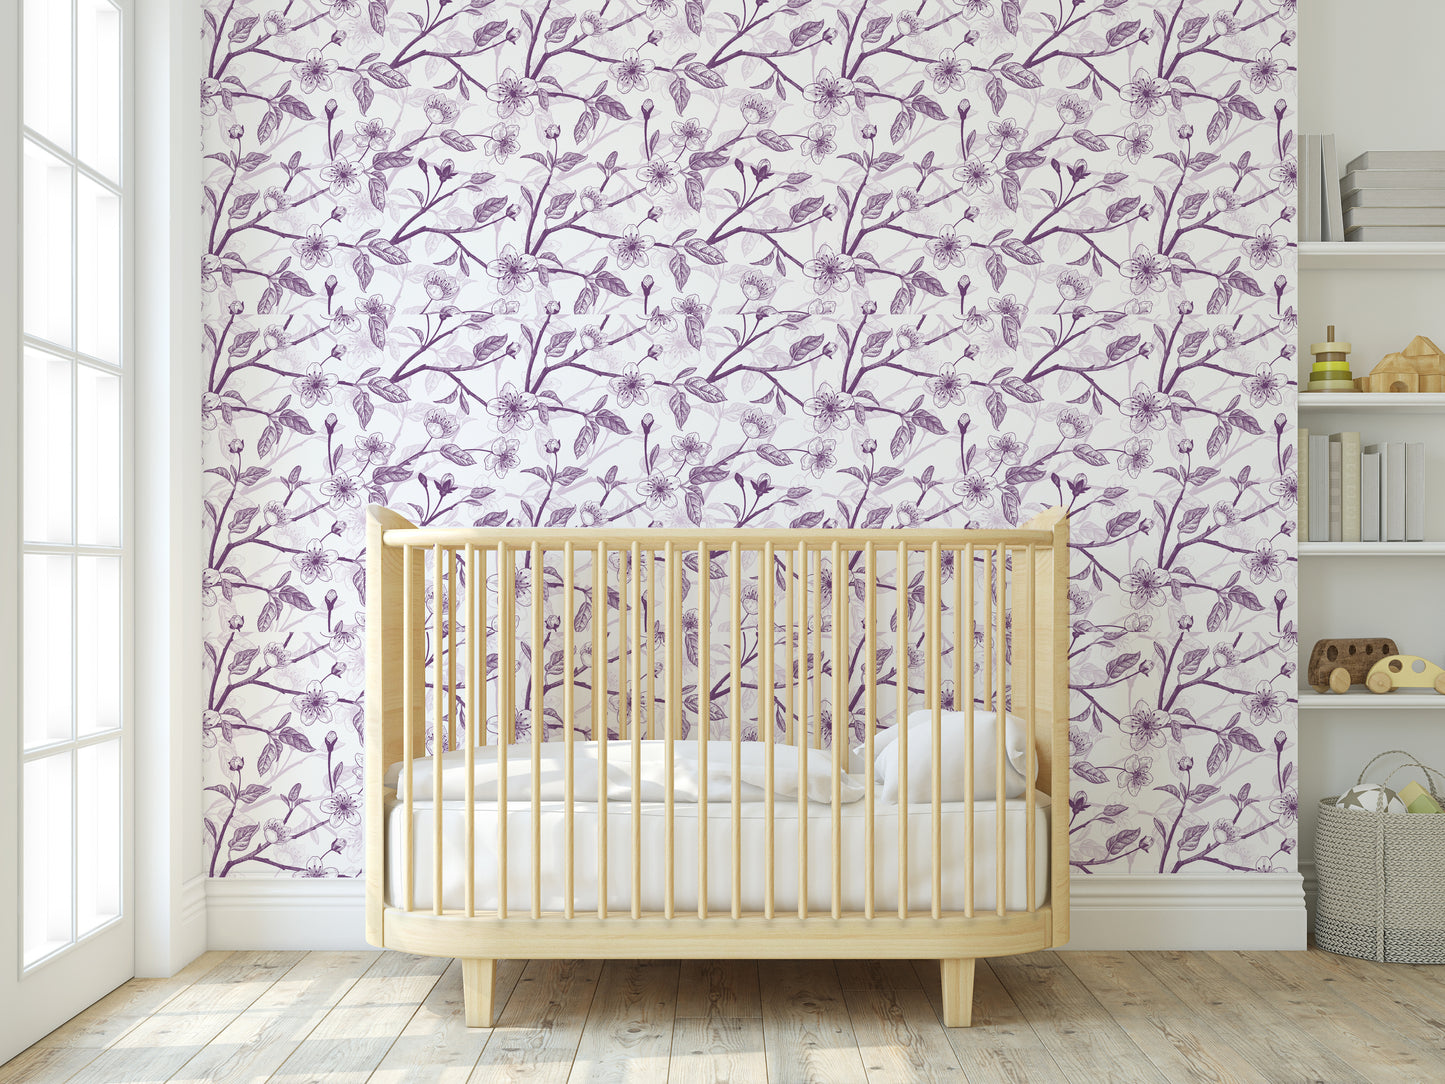 Cherry Blossom wallpaper in nursery